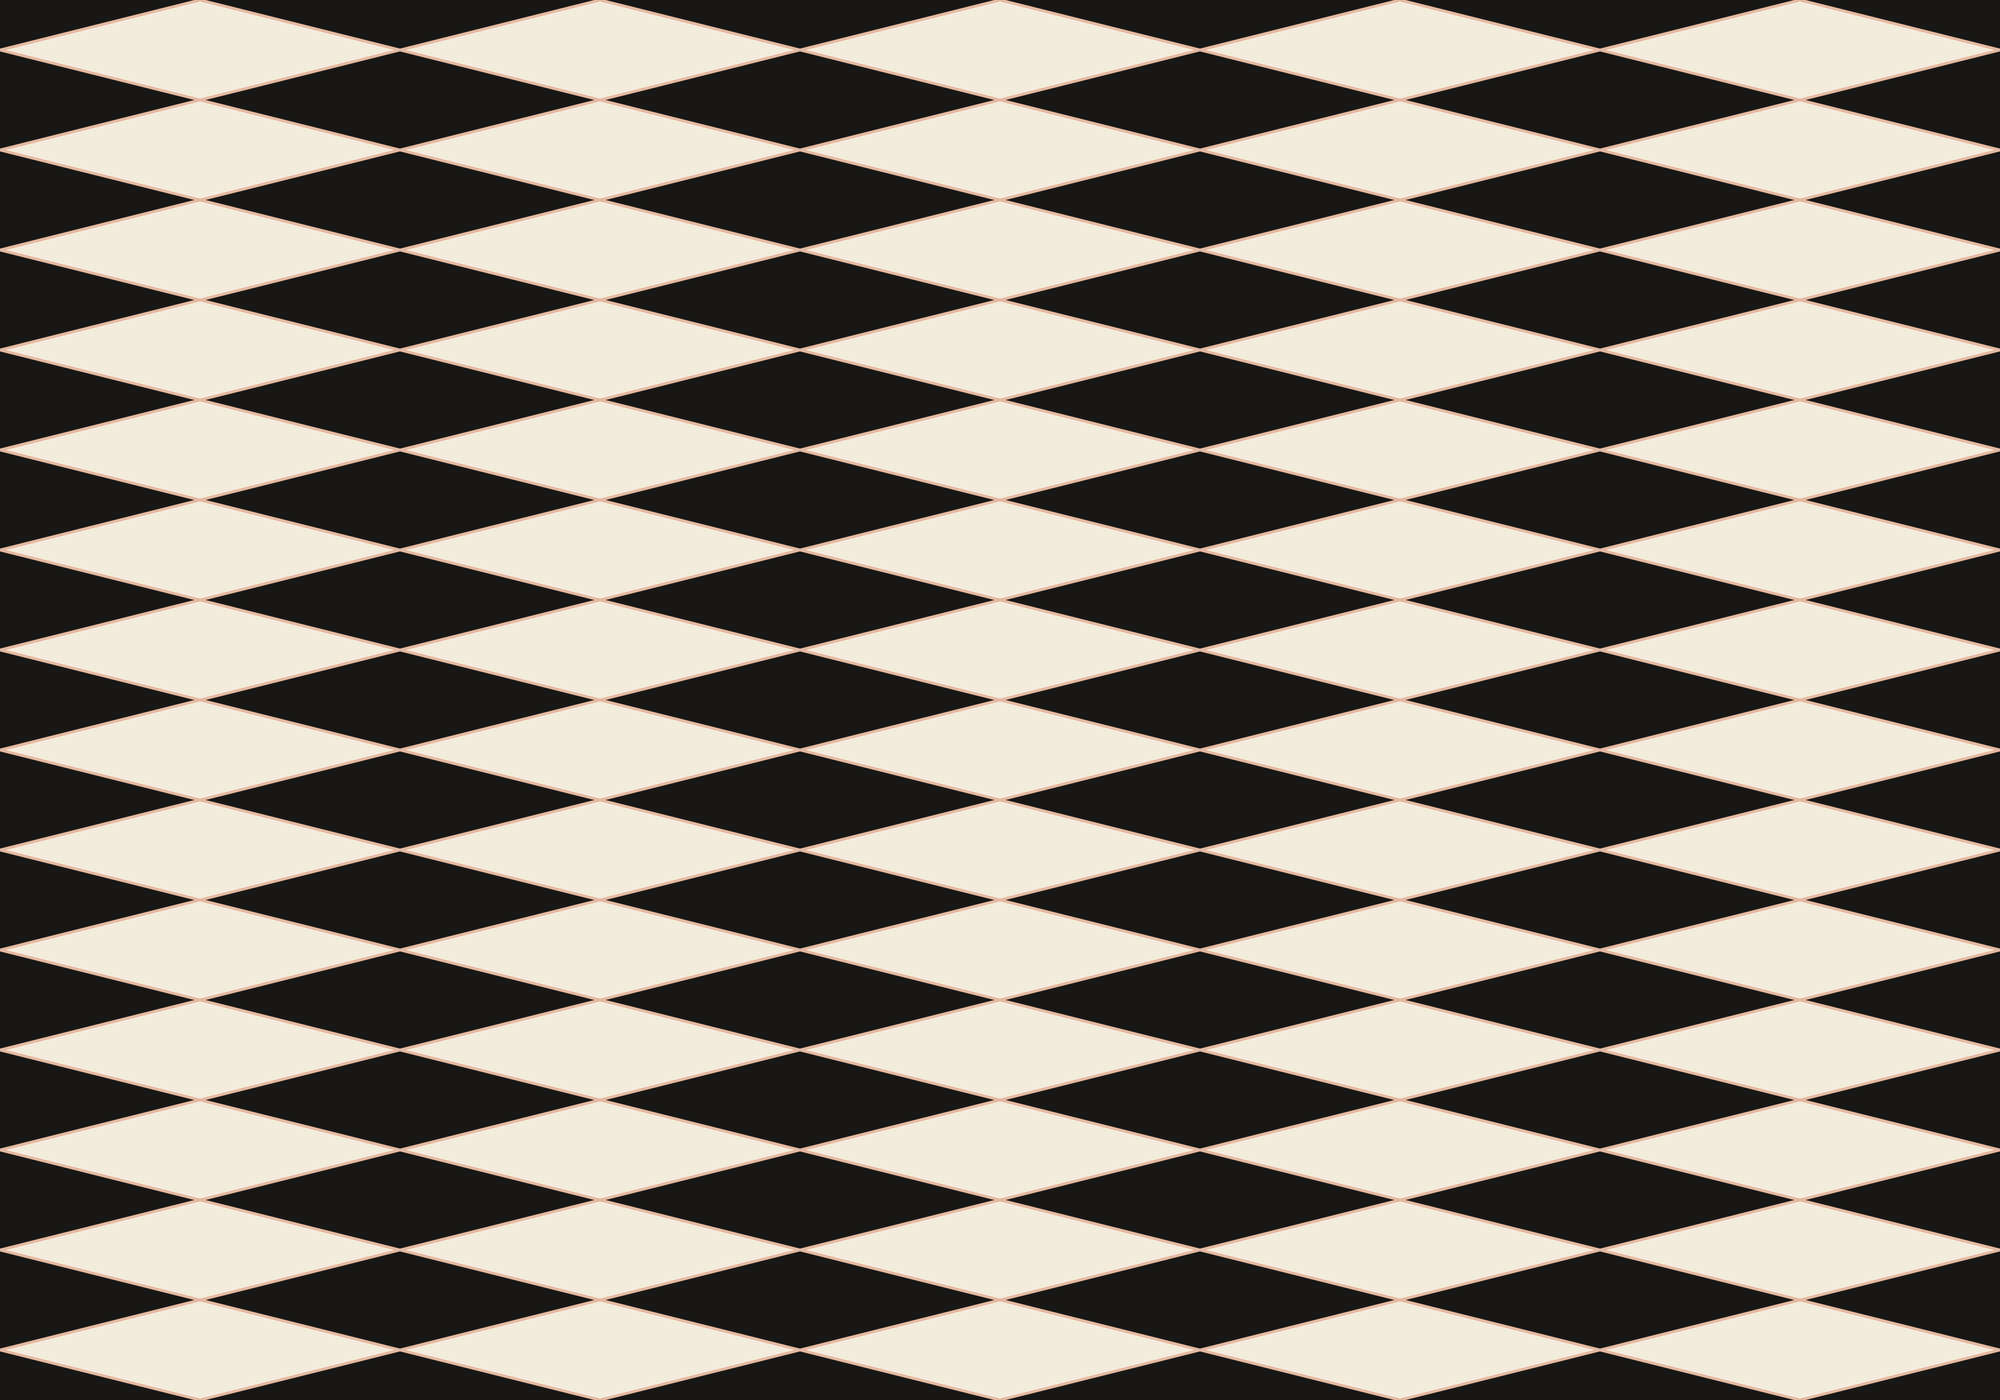             Digital behang Retro met ruitpatroon Grafisch - Zwart, Crème, Perzik | Strukturenvlies
        